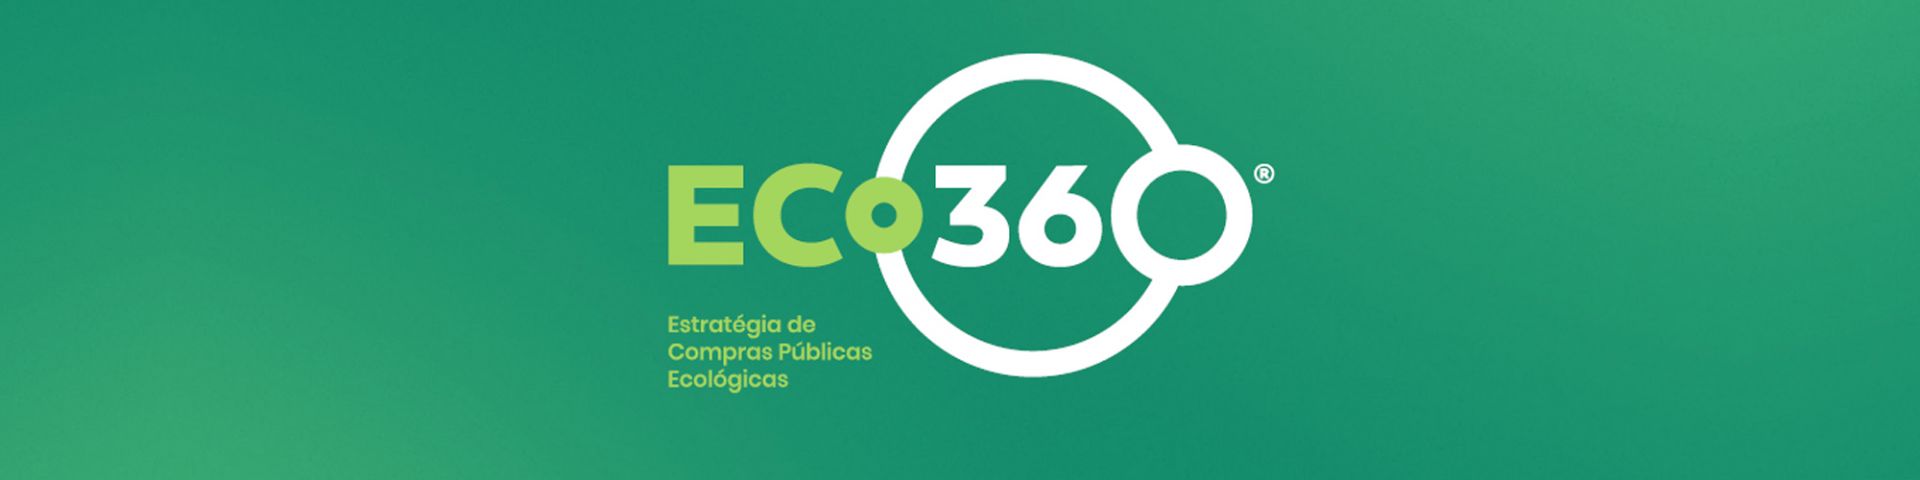 eco360